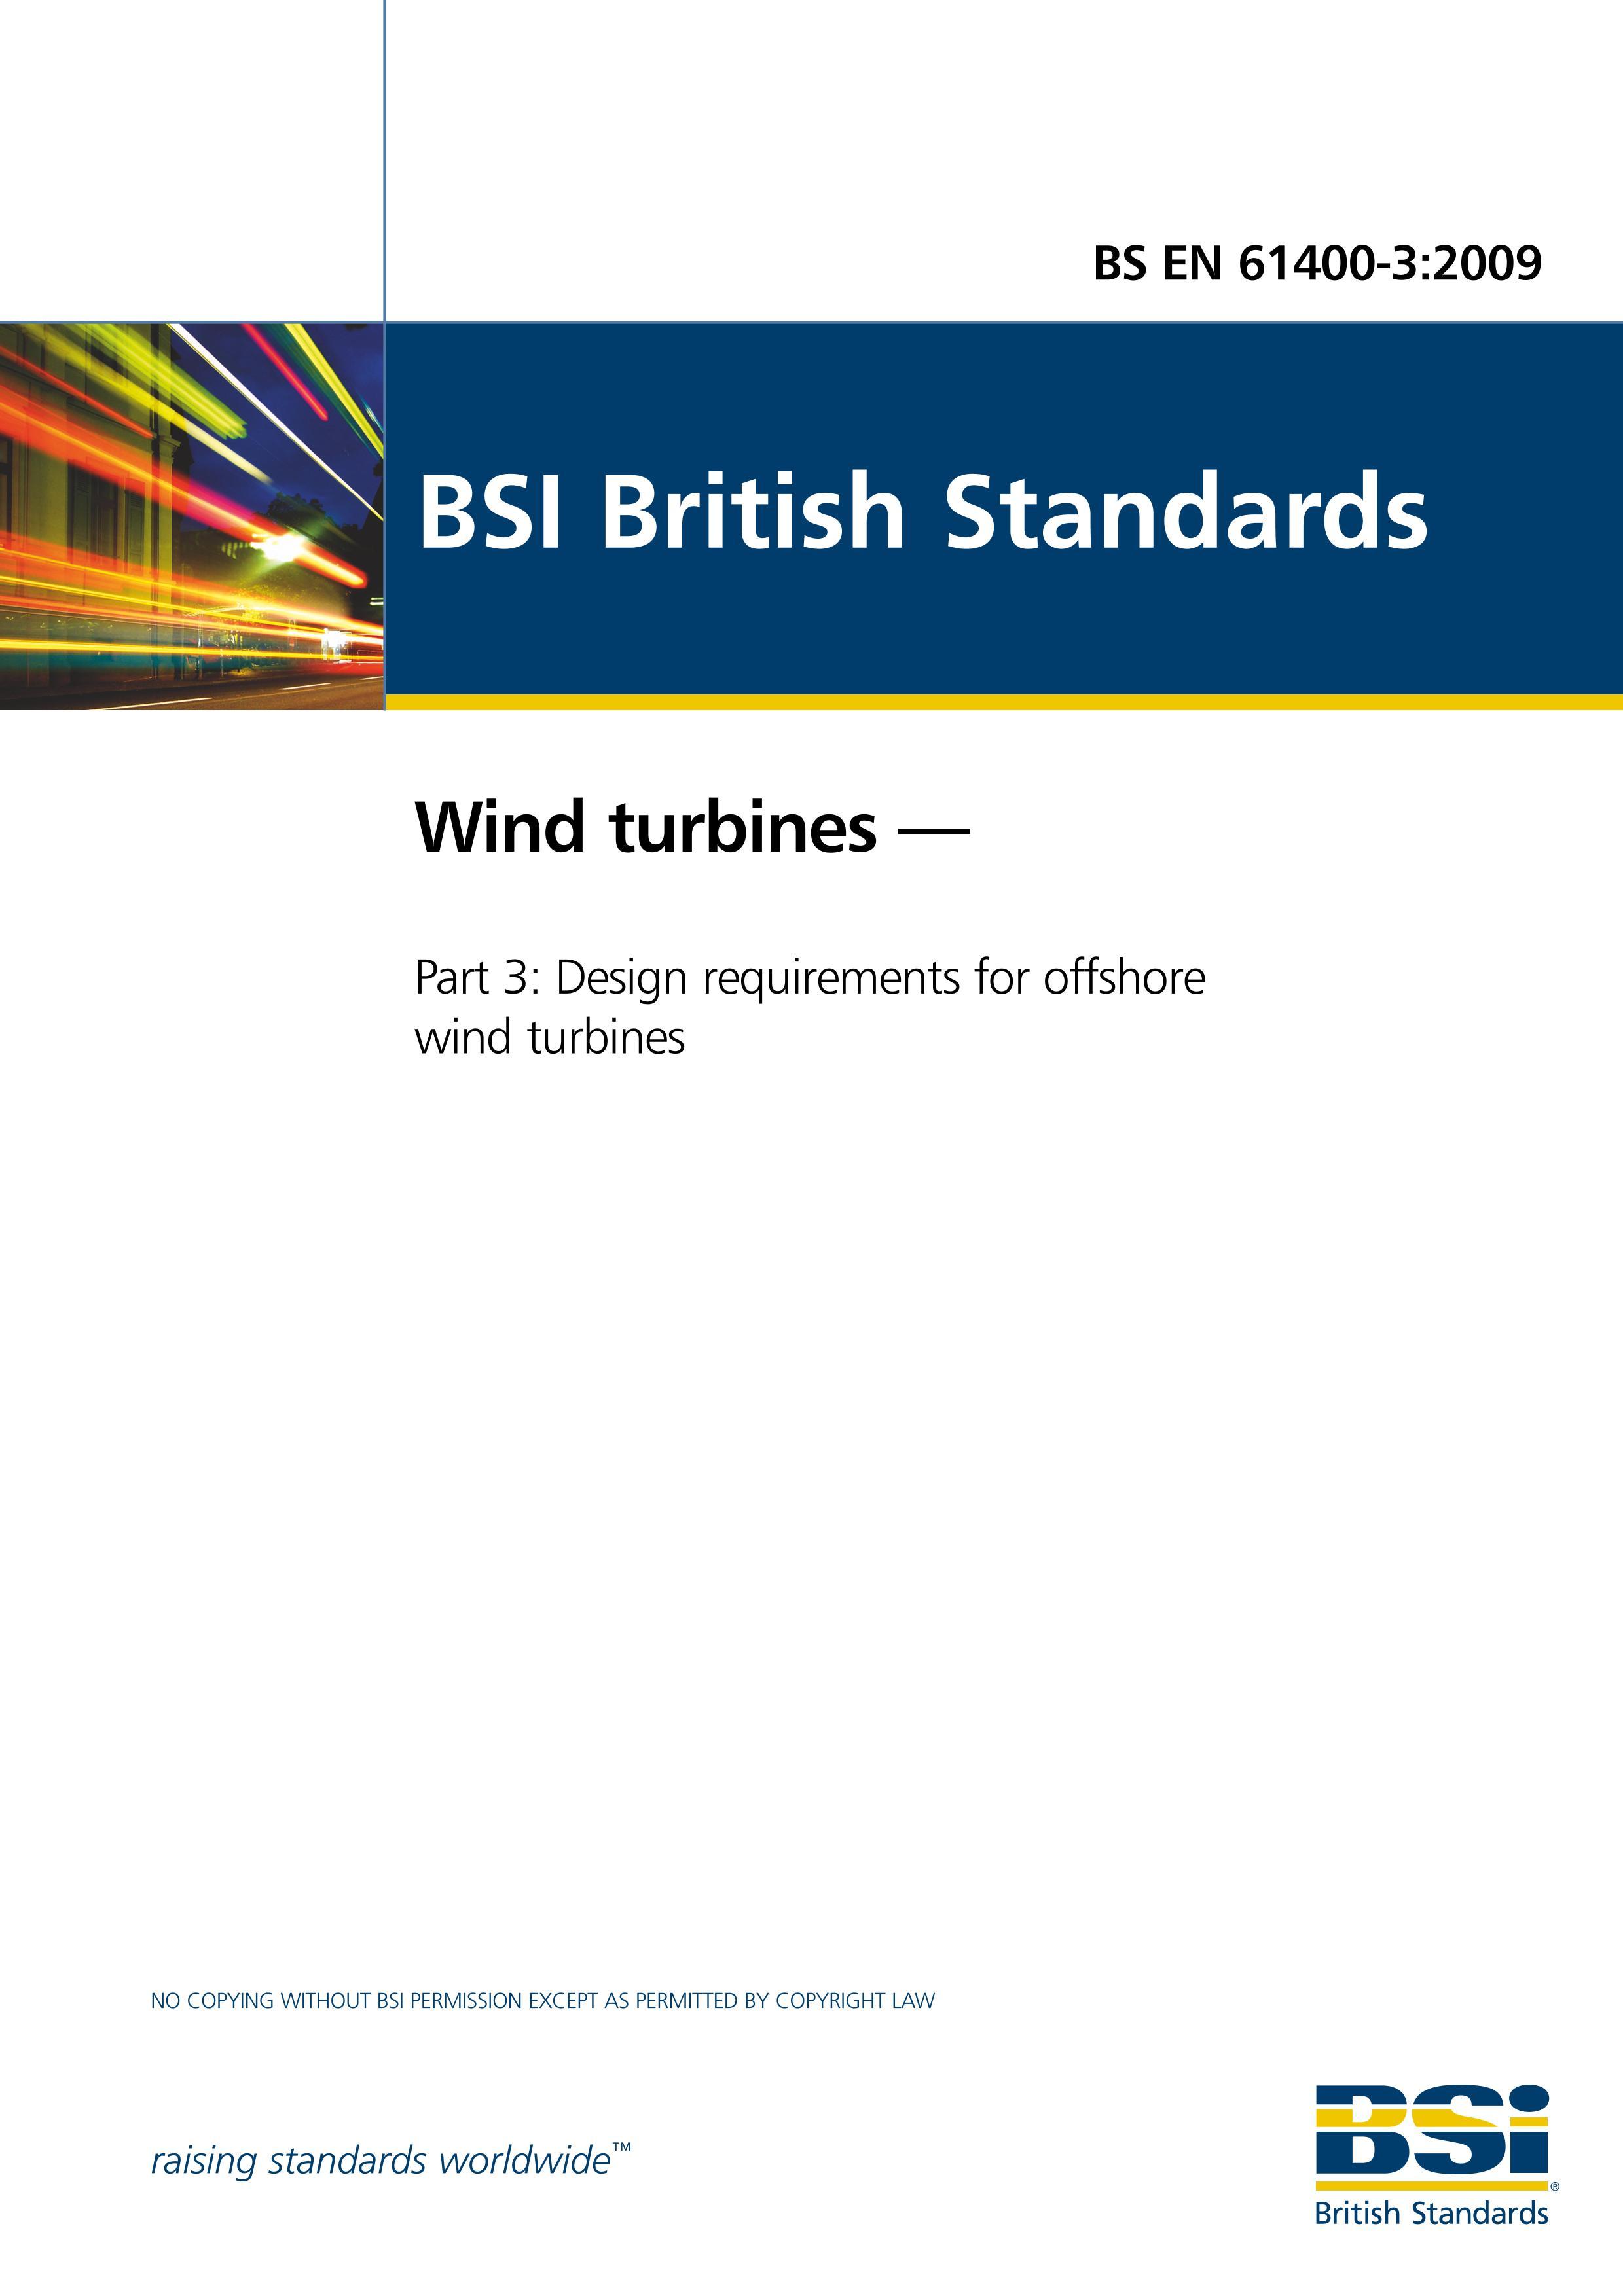 BS EN 61400-3-2009 Wind turbines  Part 3 design requirements for offshore wind turbines.pdf1ҳ